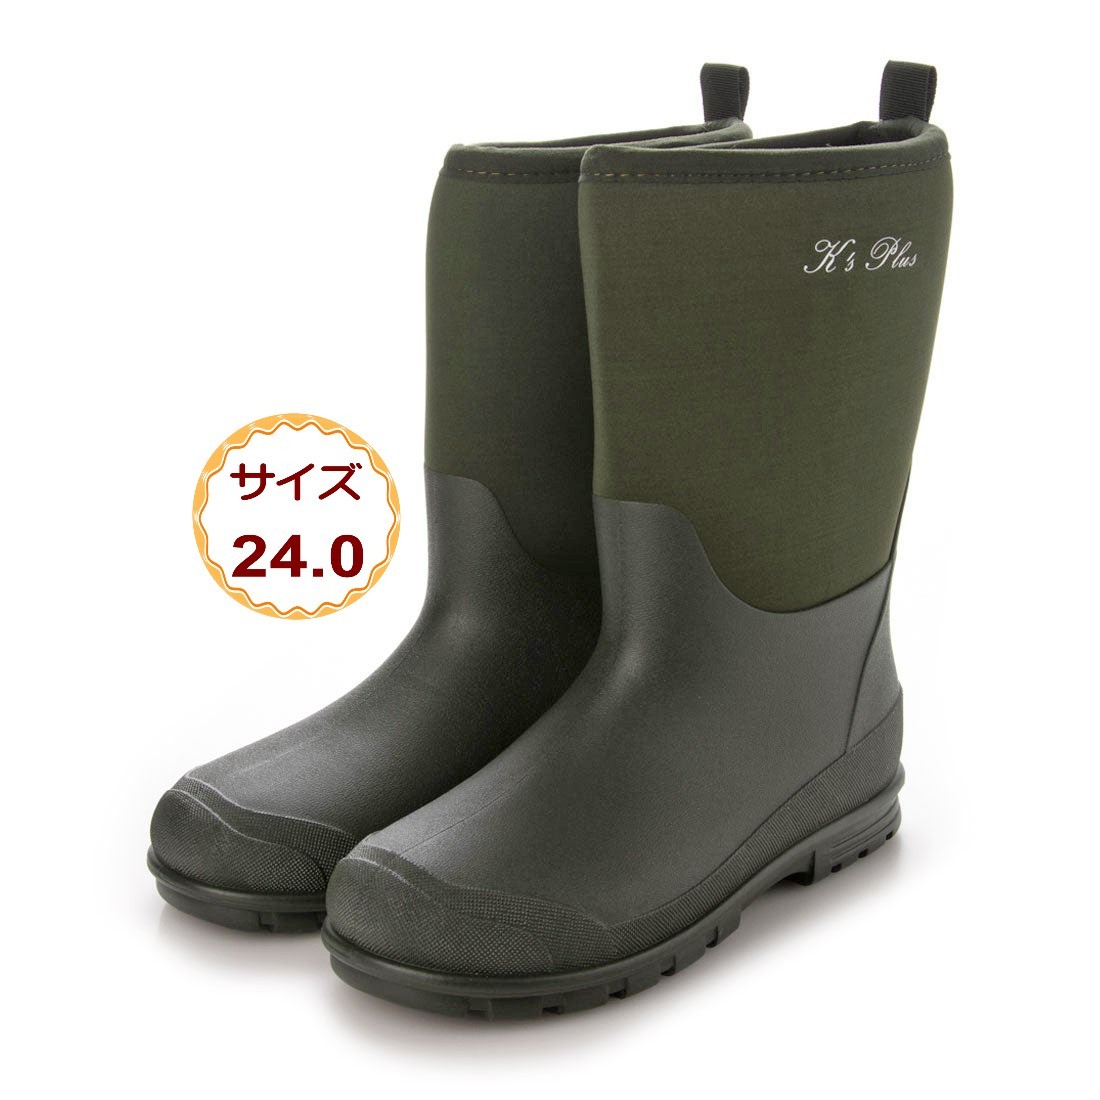  khaki 24.0cm lady's rain boots rain shoes rain boots boots Neo pre n waterproof 21077-kha-240